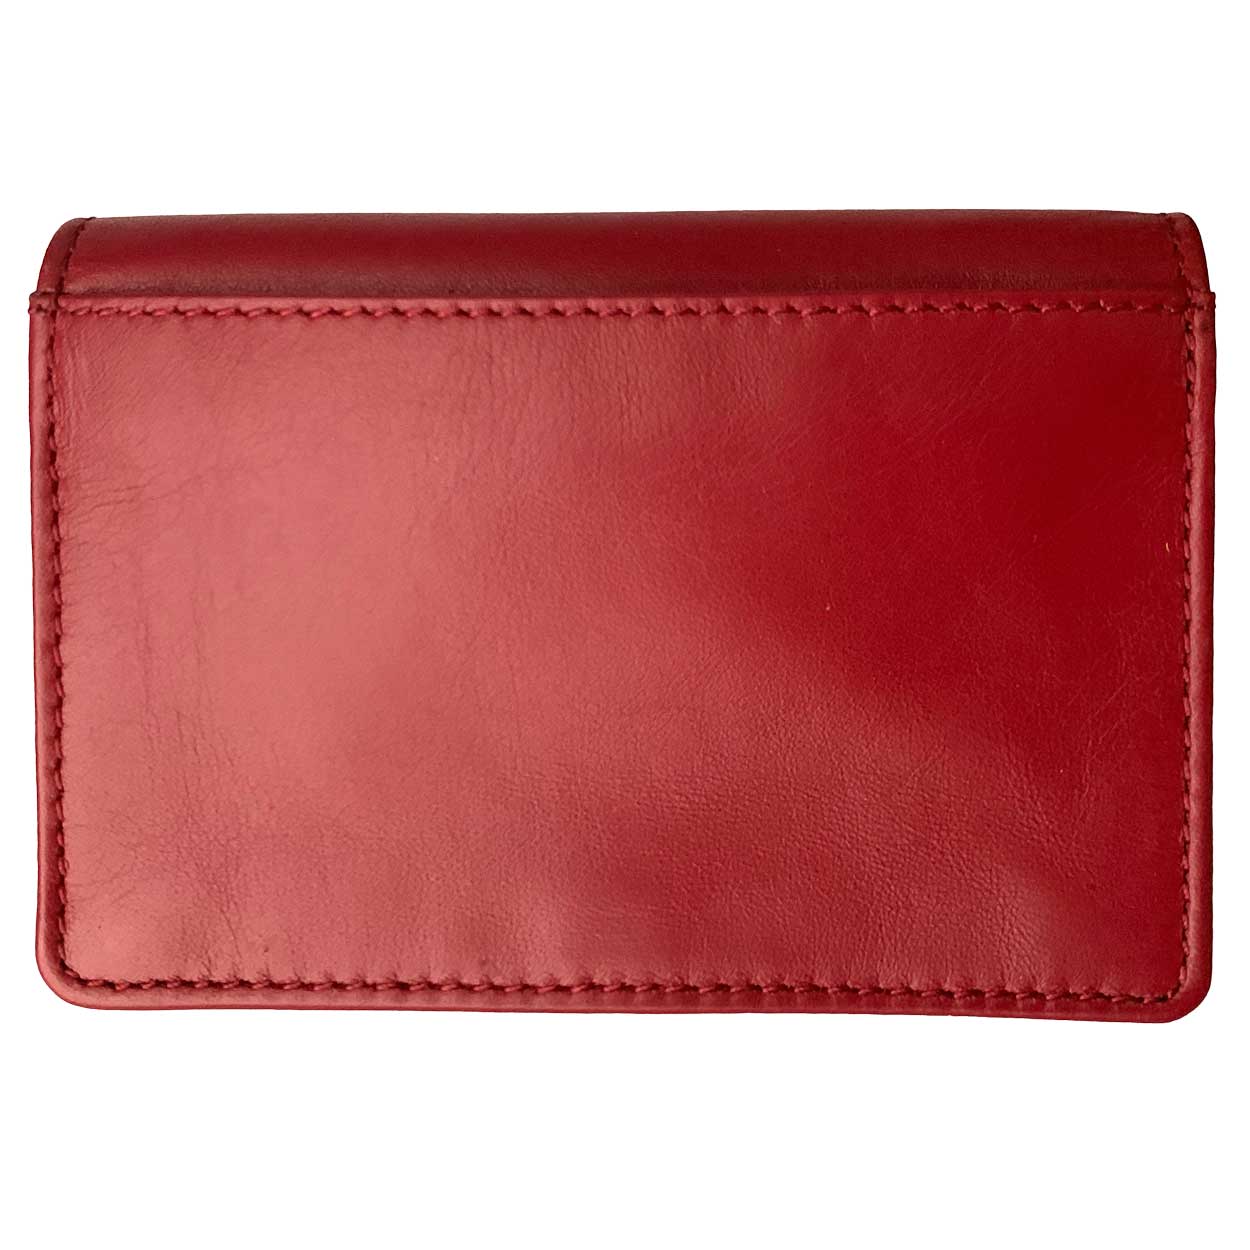 DiLoro RFID Slim Leather Travel Wallet for Men Bifold Top Flip 2 ID Windows (Napa Black)